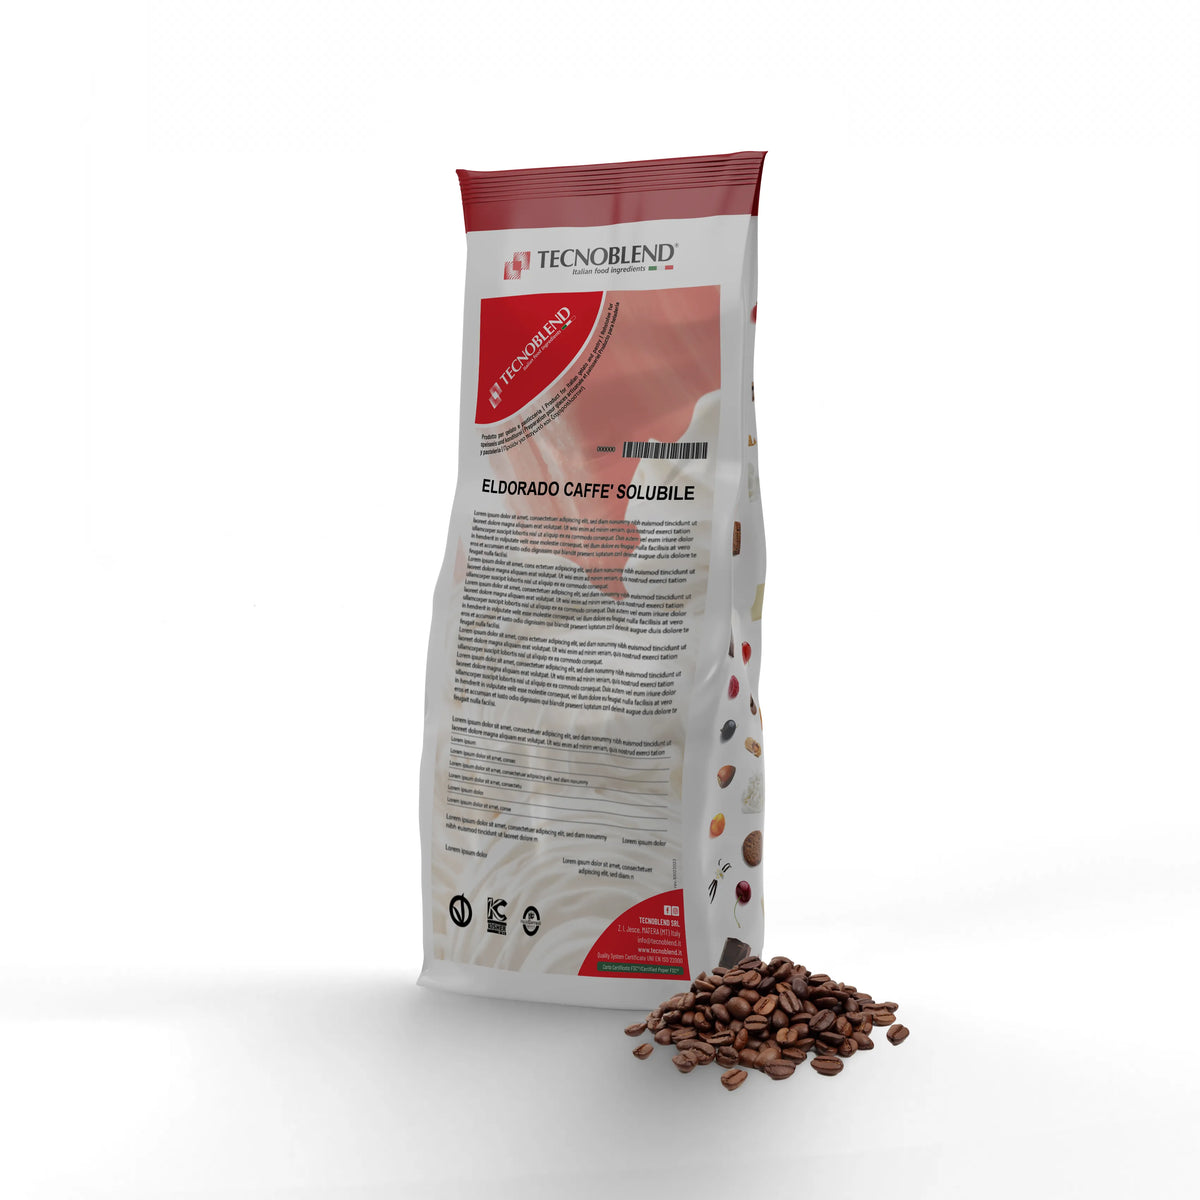 Caffè solubile a solubilità istantanea, puro 100% per gelateria e pasticceria, ELDORADO